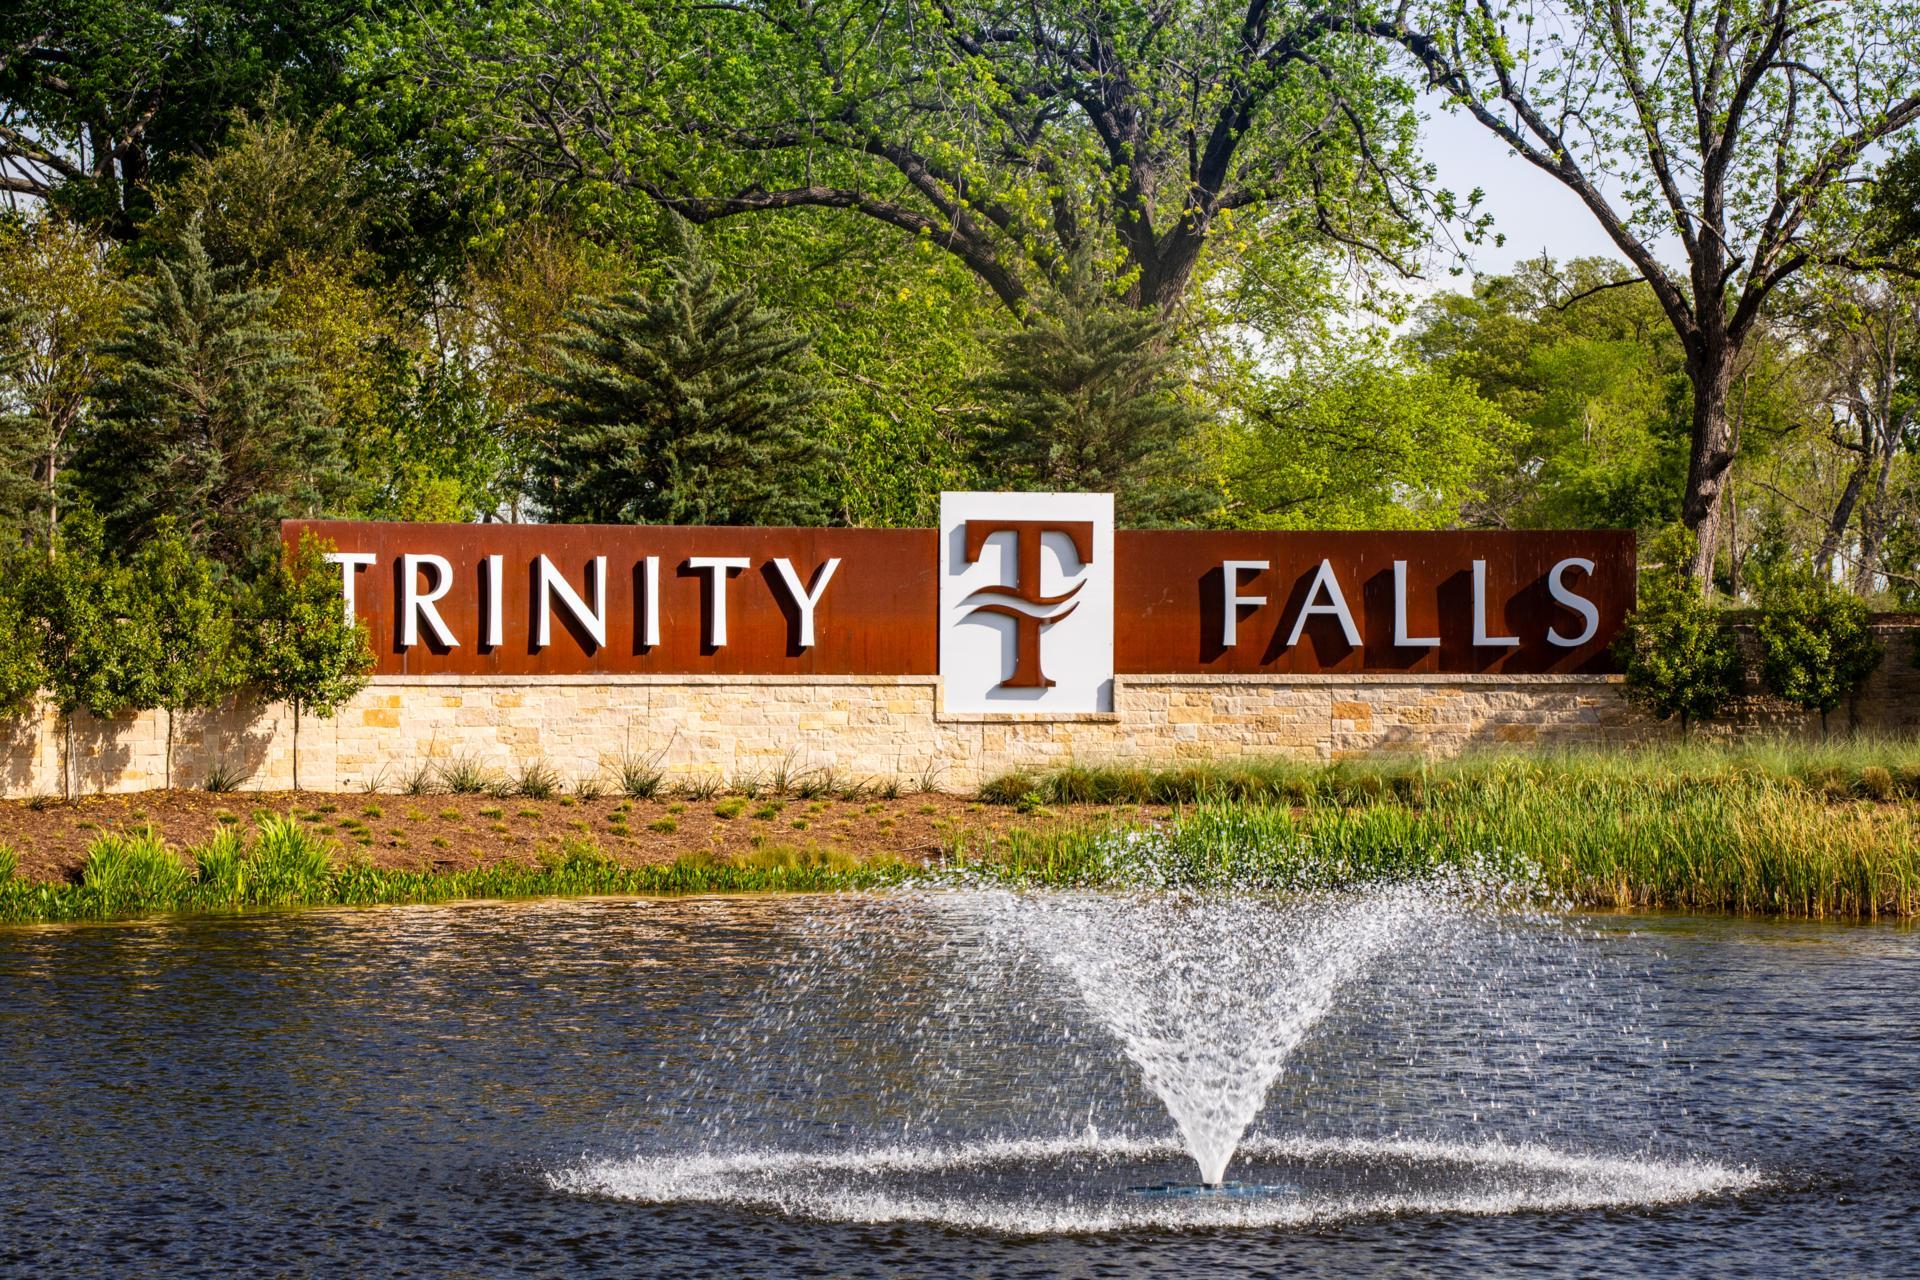 The Trinity Falls Entrance Monument